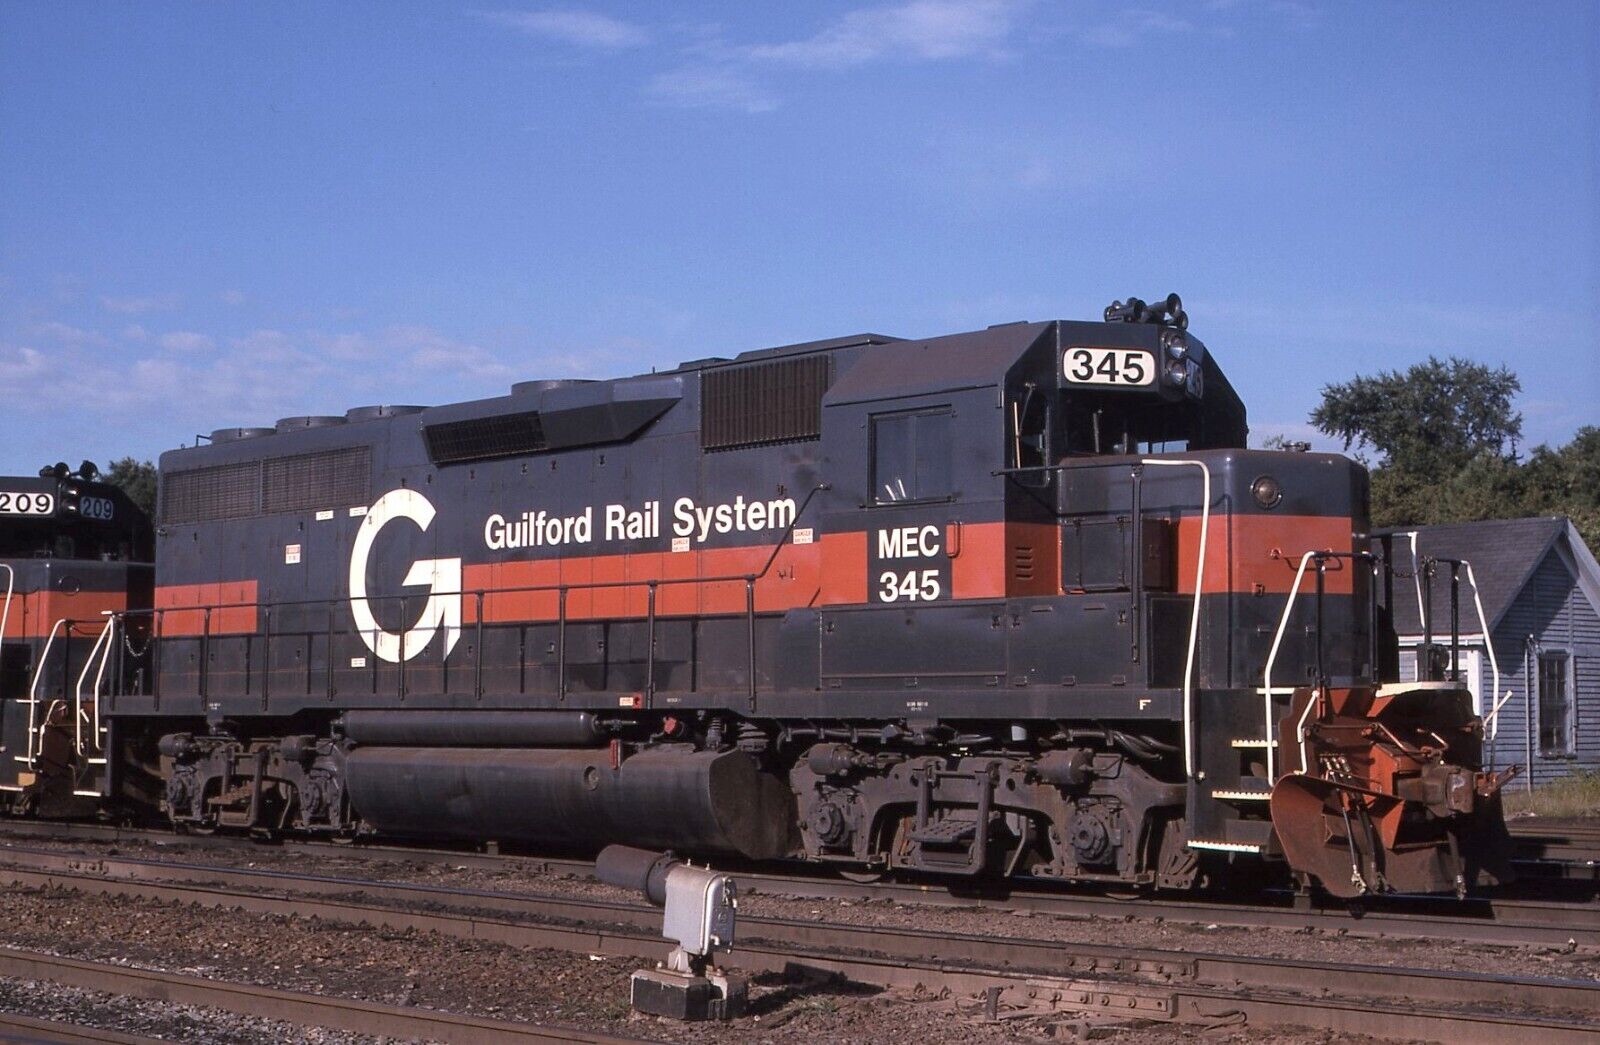 Original Slide: Maine Central / Guilford Rail System GP40 345